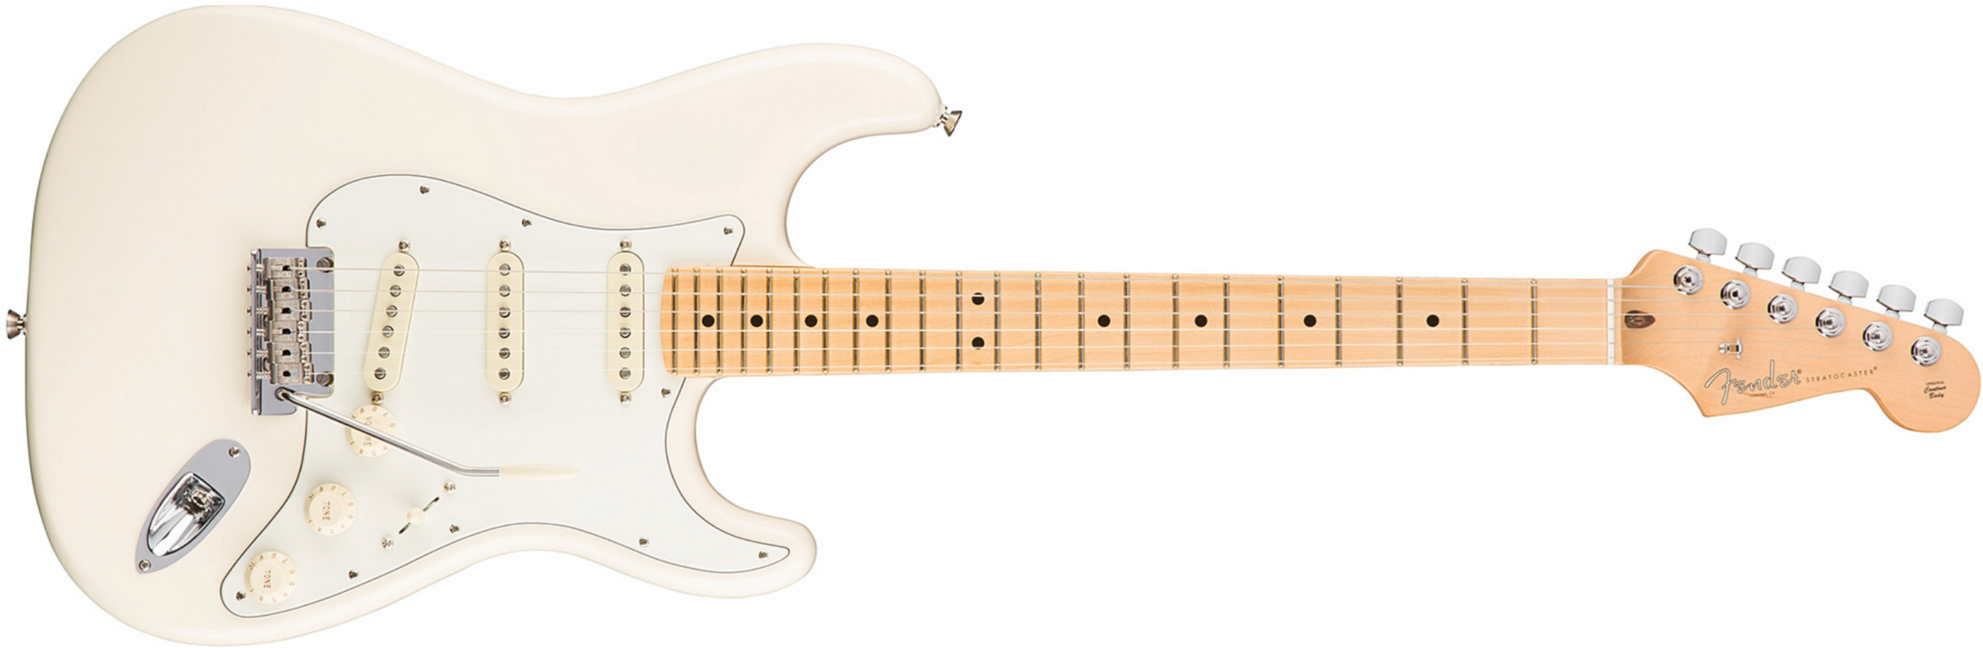 Fender Strat American Professional 2017 3s Usa Mn - Olympic White - Elektrische gitaar in Str-vorm - Main picture